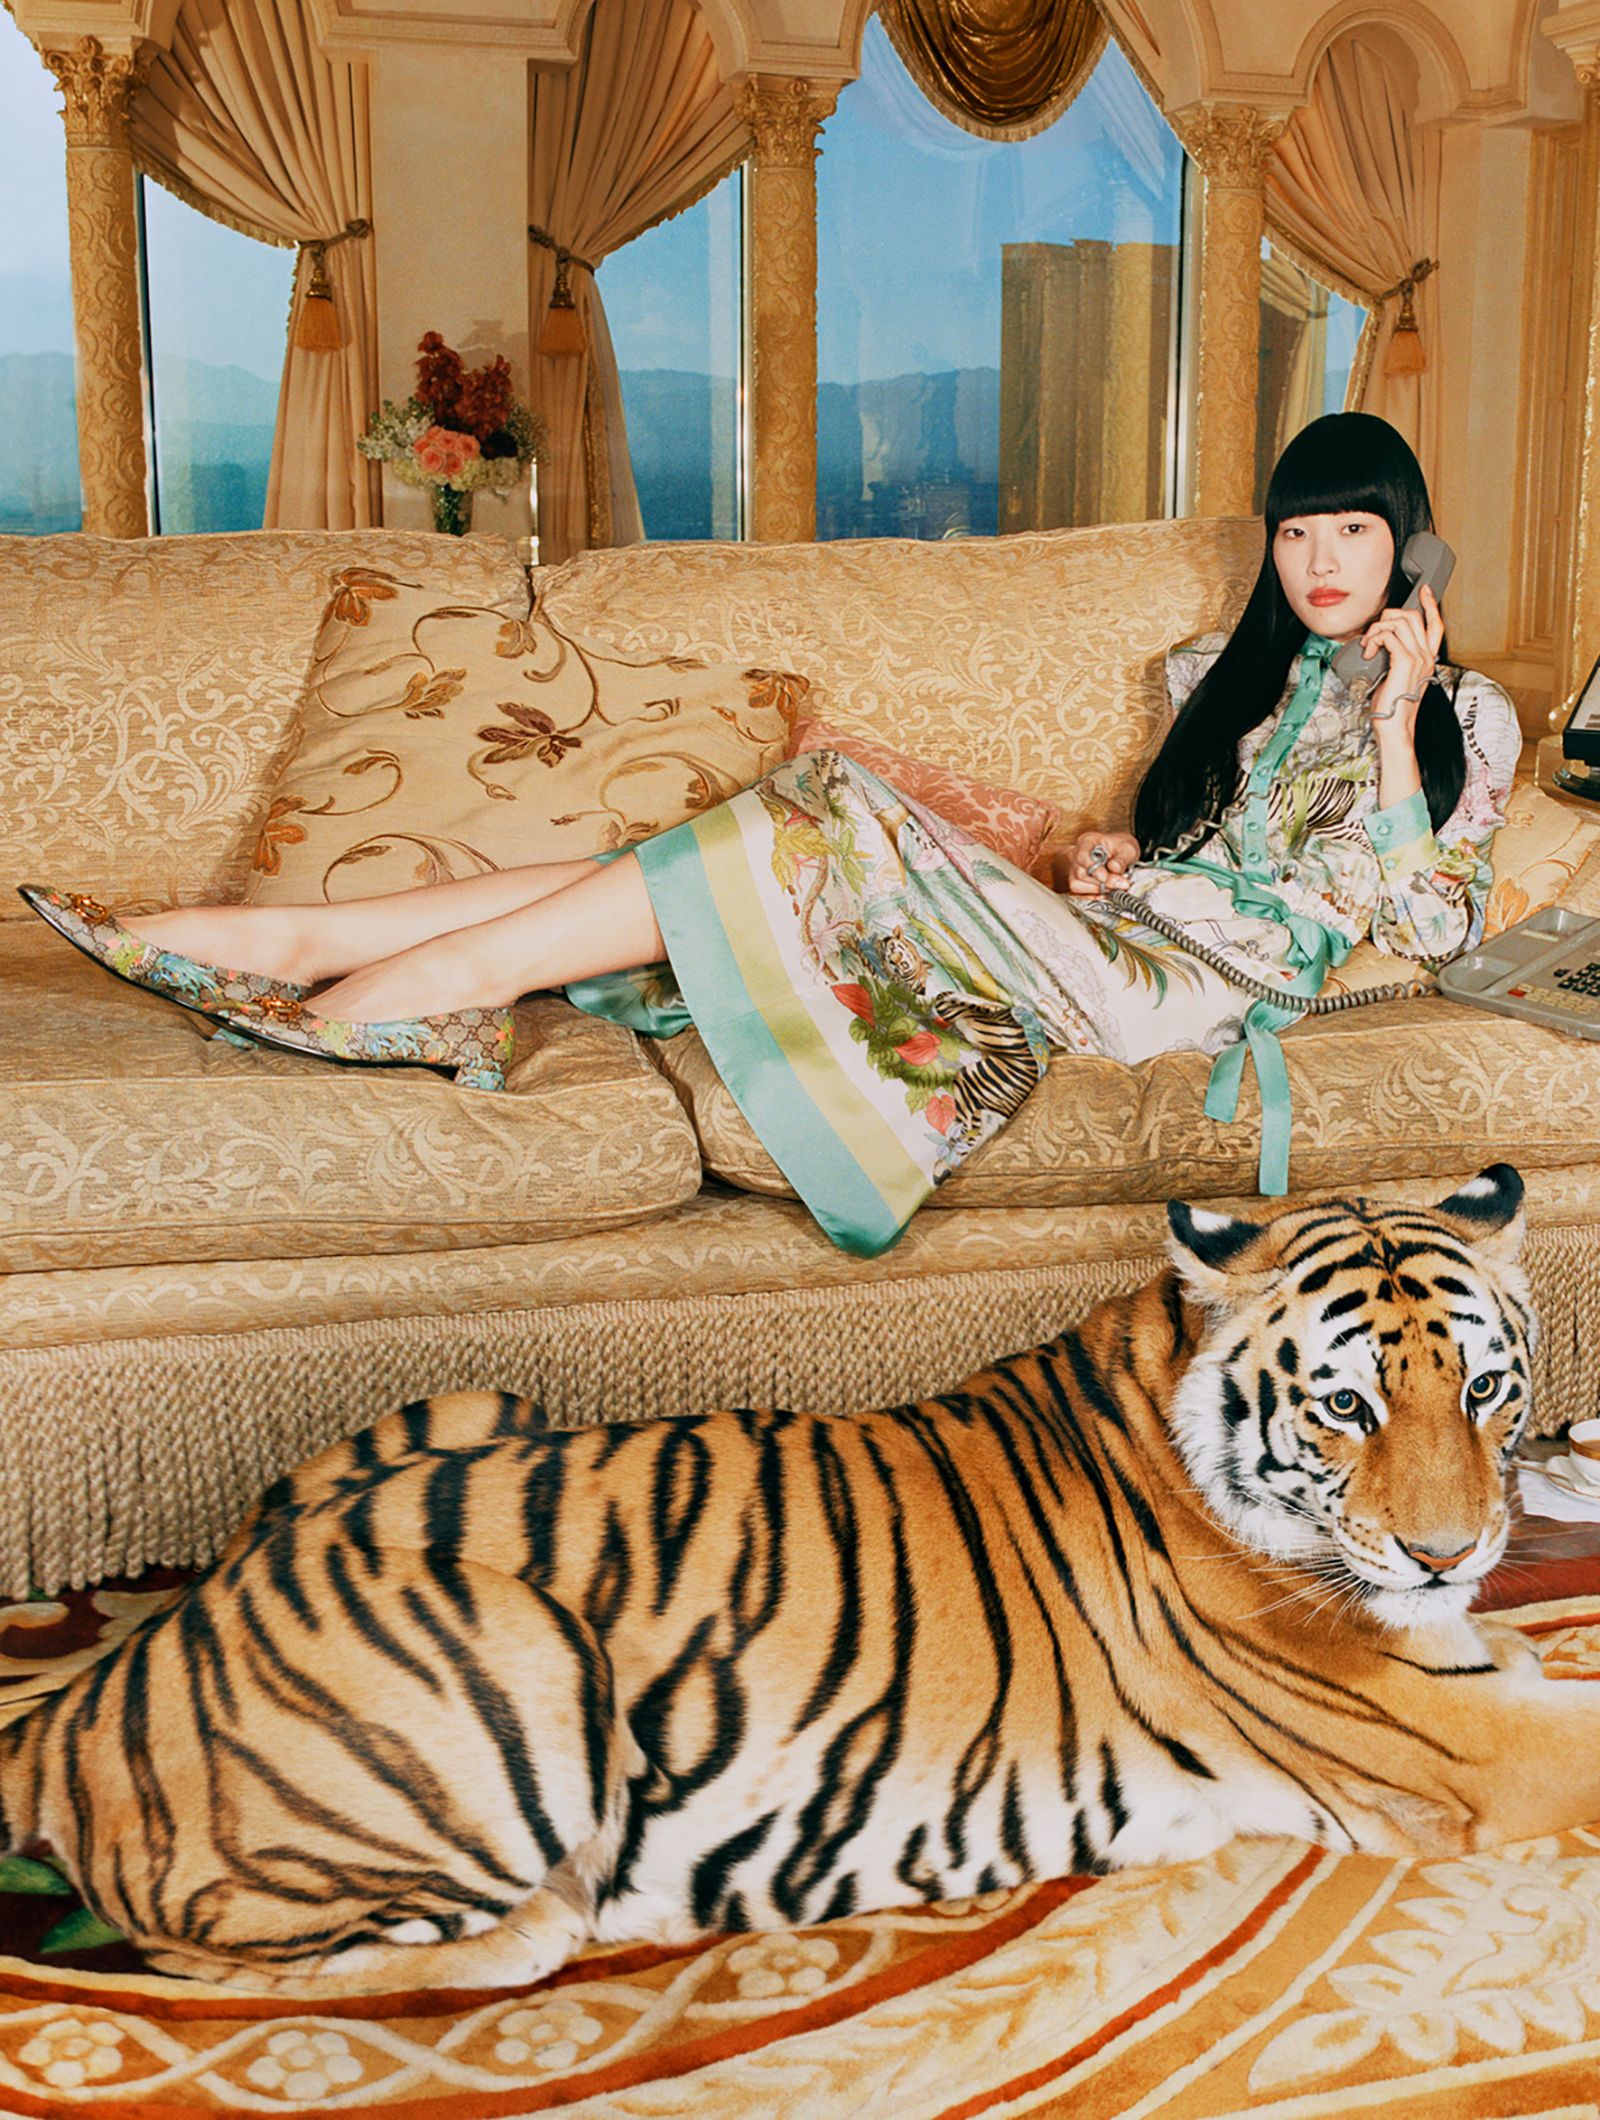 Tiger-inspired fashion embodies Lunar New Year spirit - VnExpress